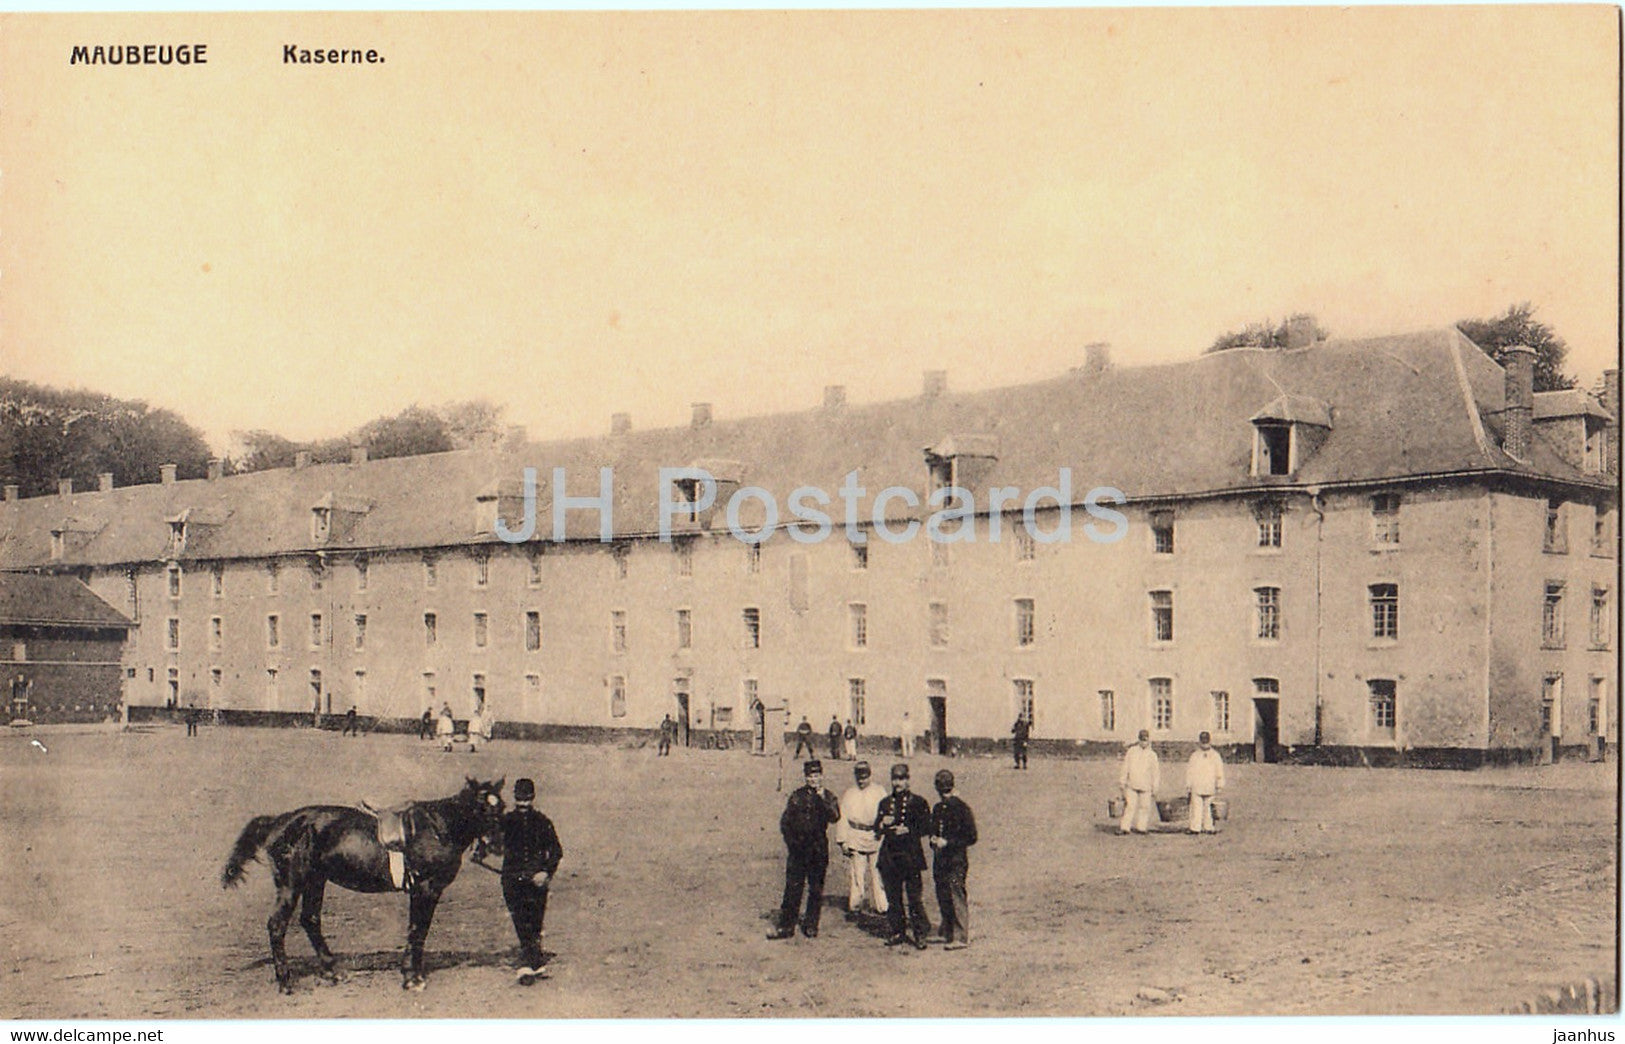 Maubeuge - Kaserne - military - horse - old postcard - France - unused - JH Postcards